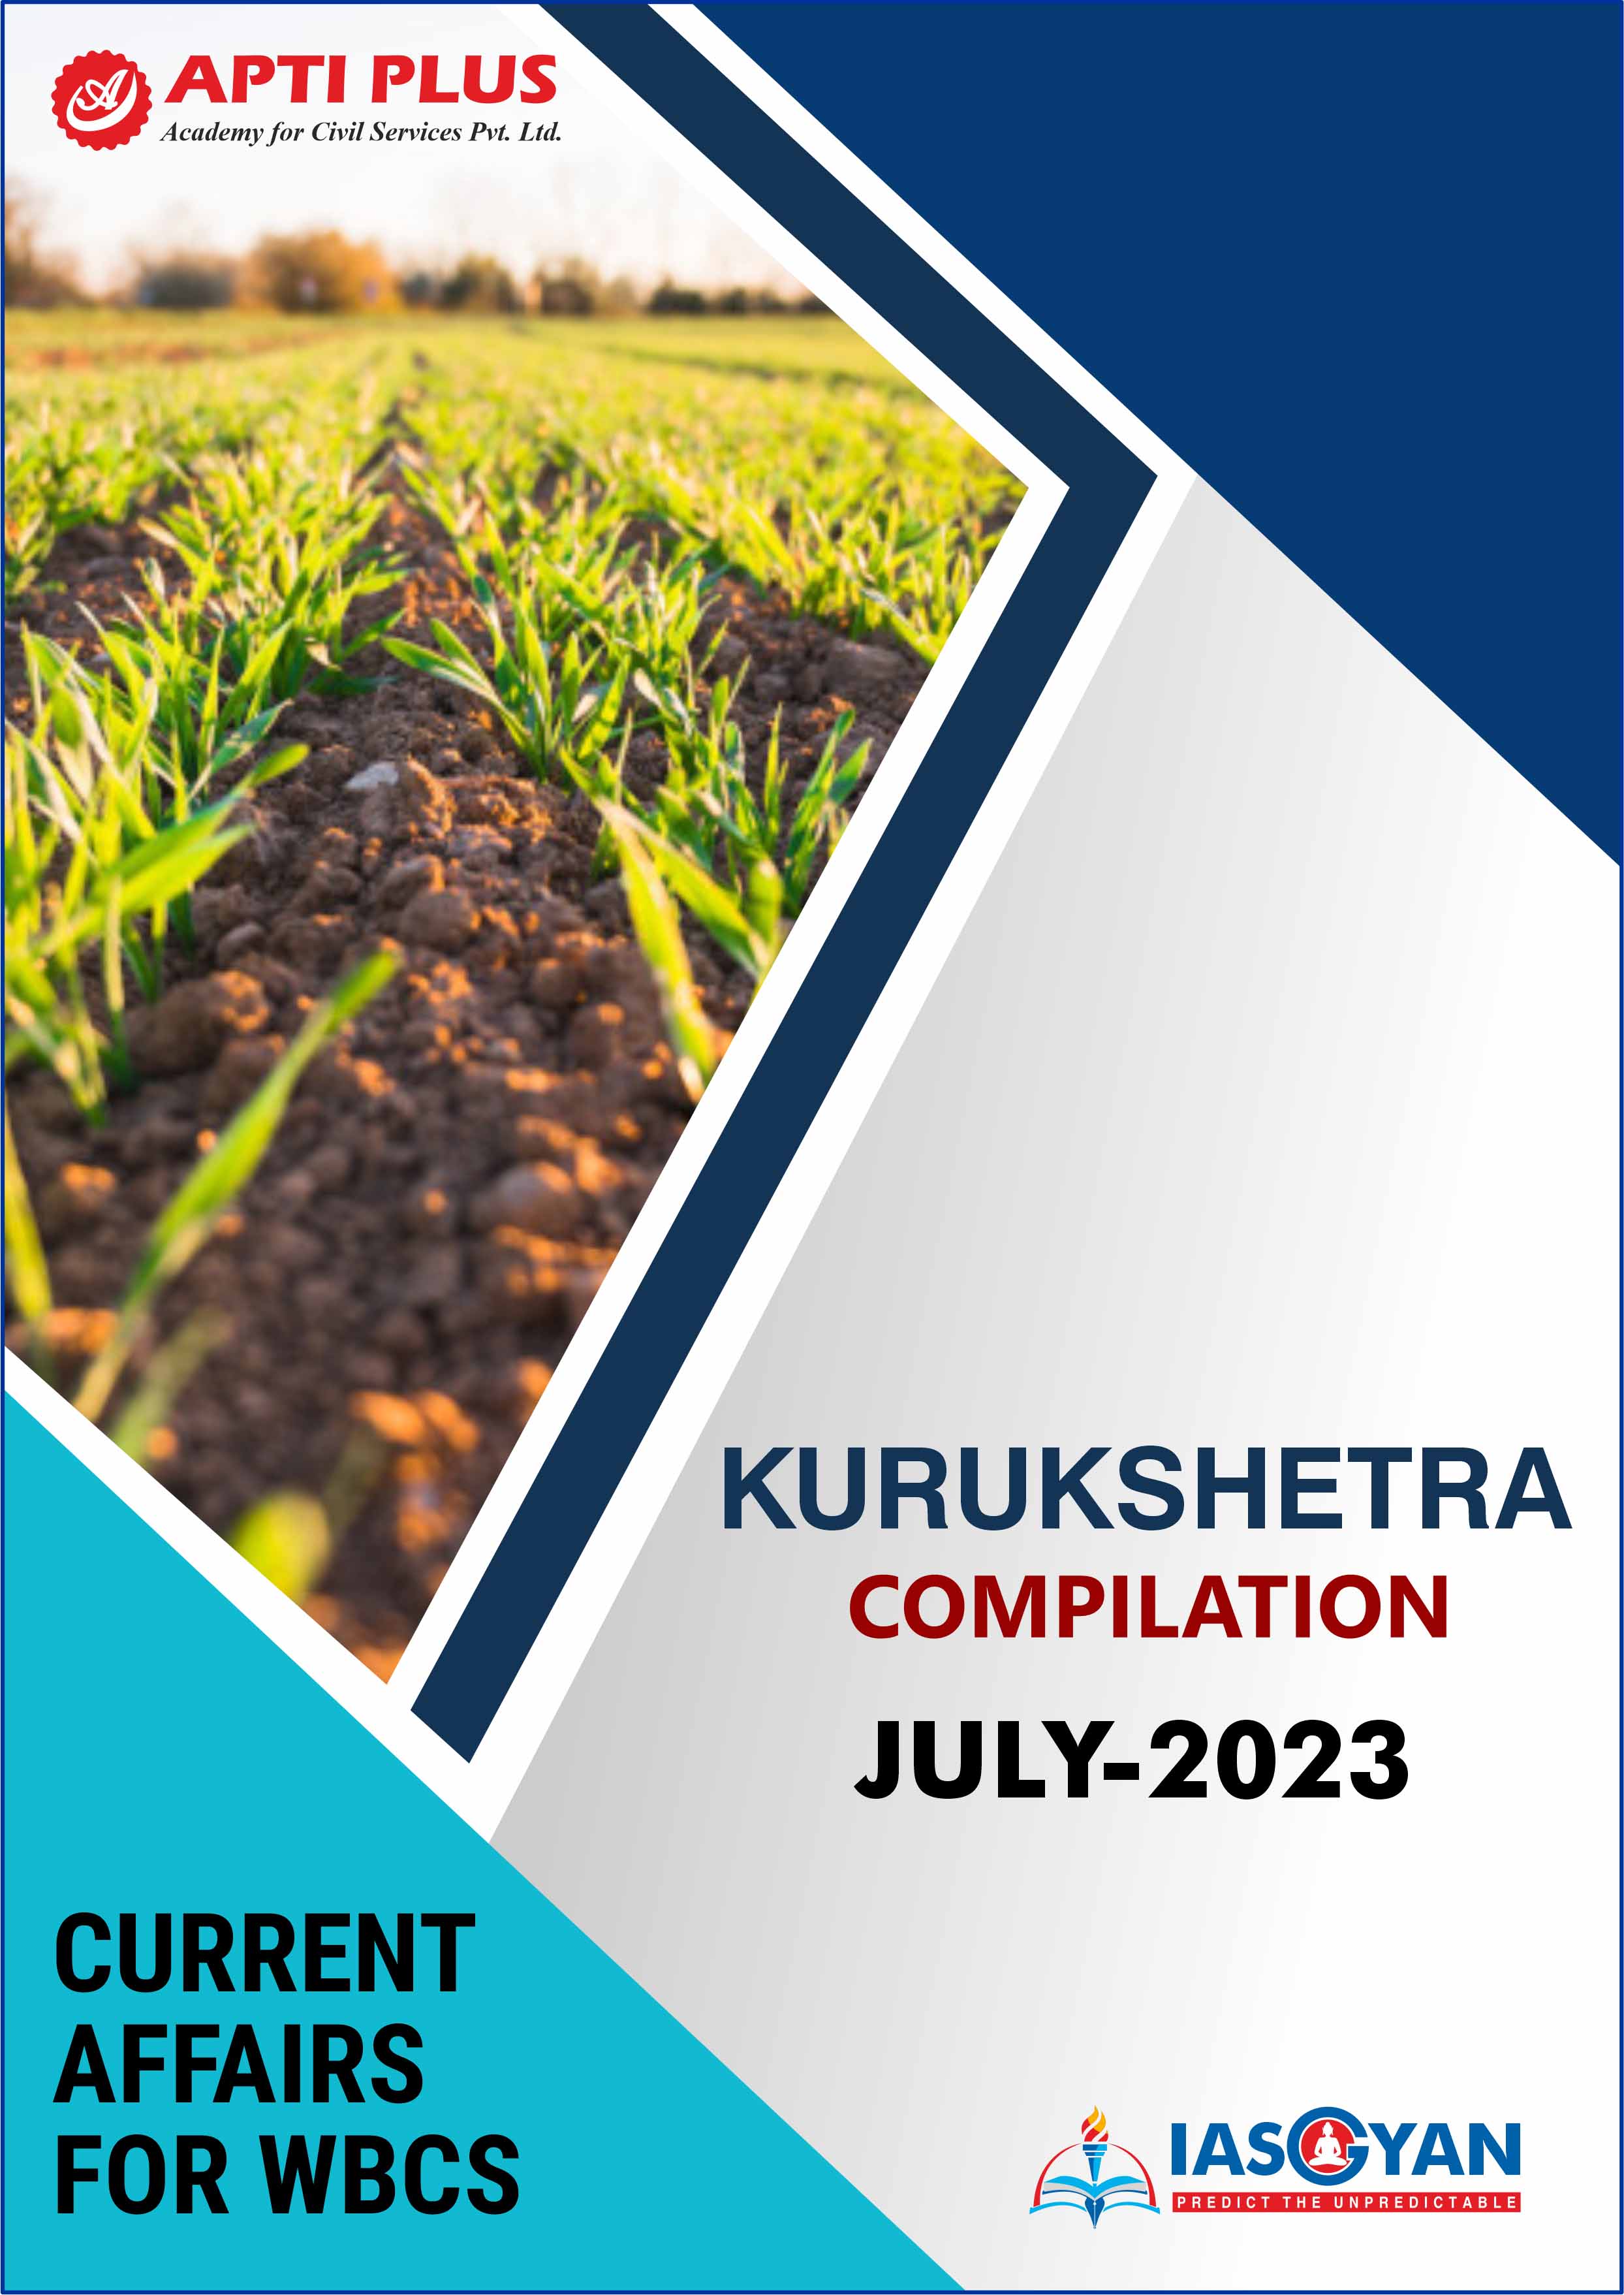 KURUKSHETRA COMPILATION JULY 2023